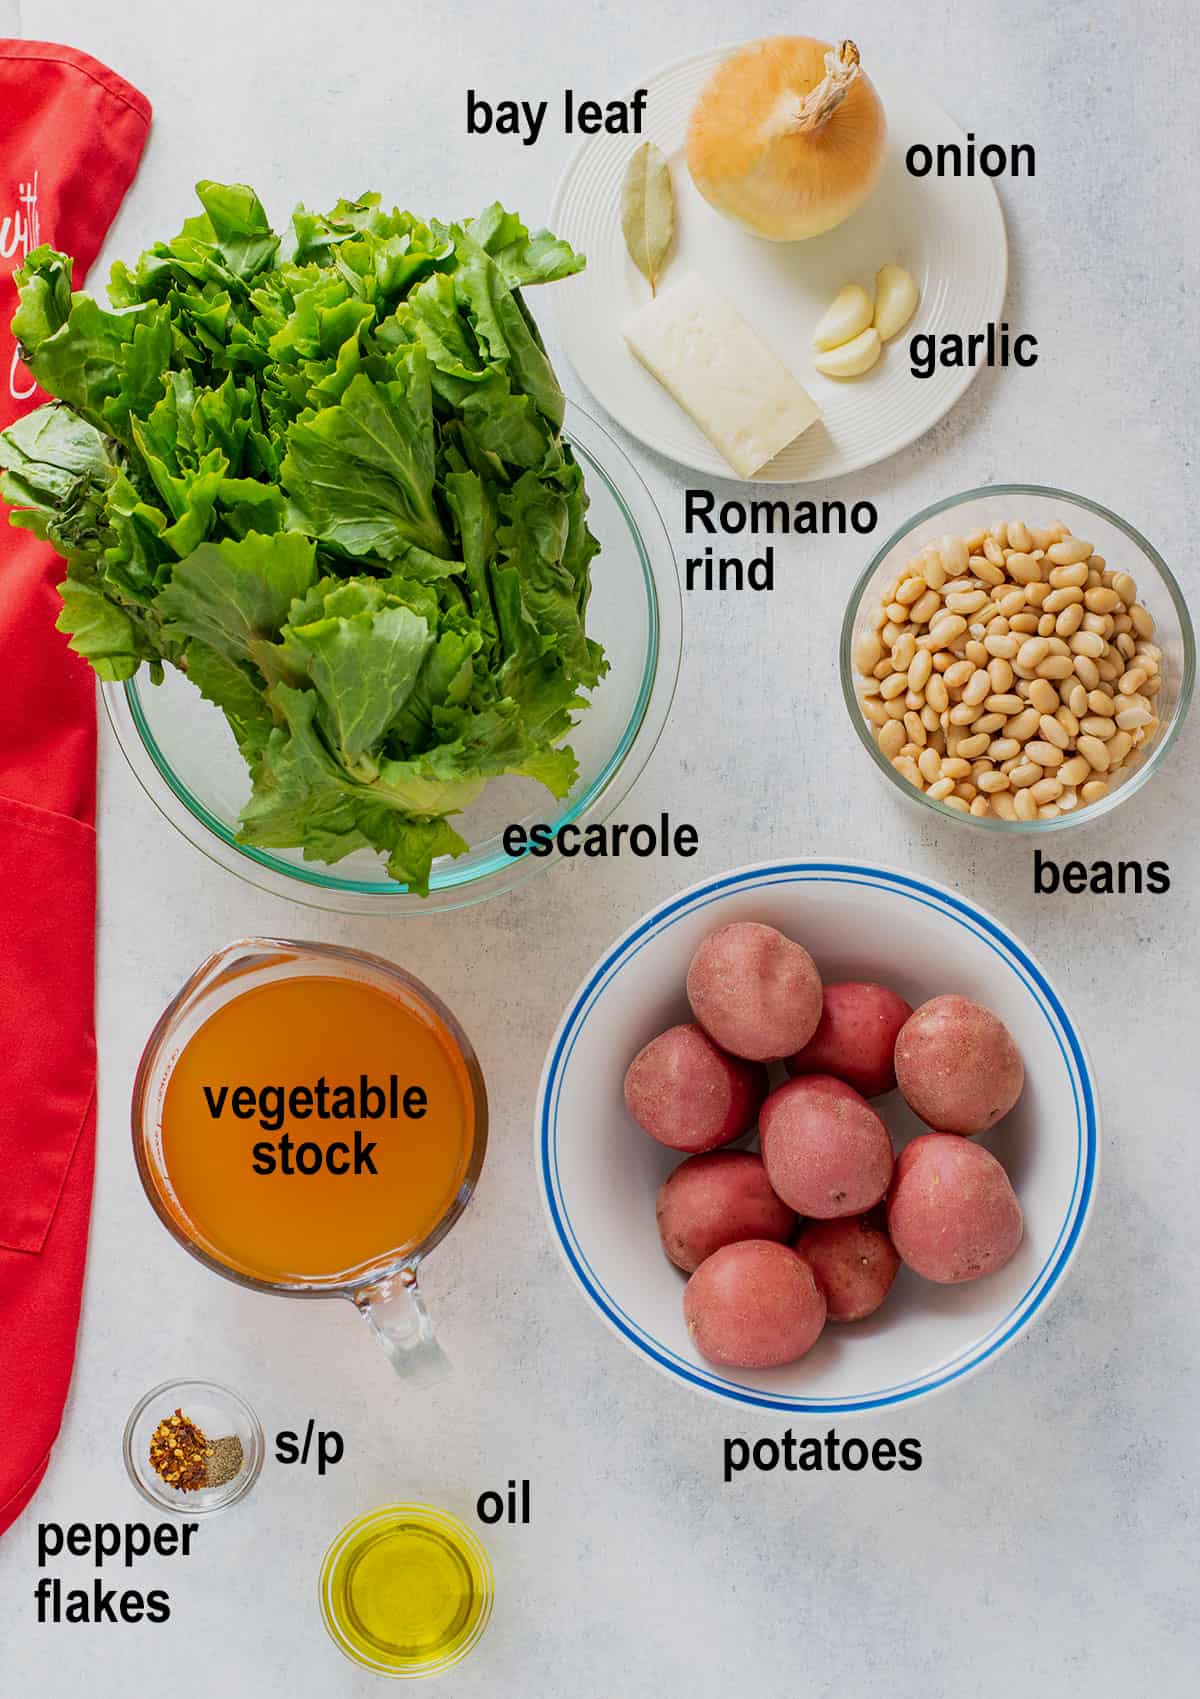 bay leaf, onion, garlic, Romano rind, escarole, beans, vegetable stock, potatoes, spices, oil.